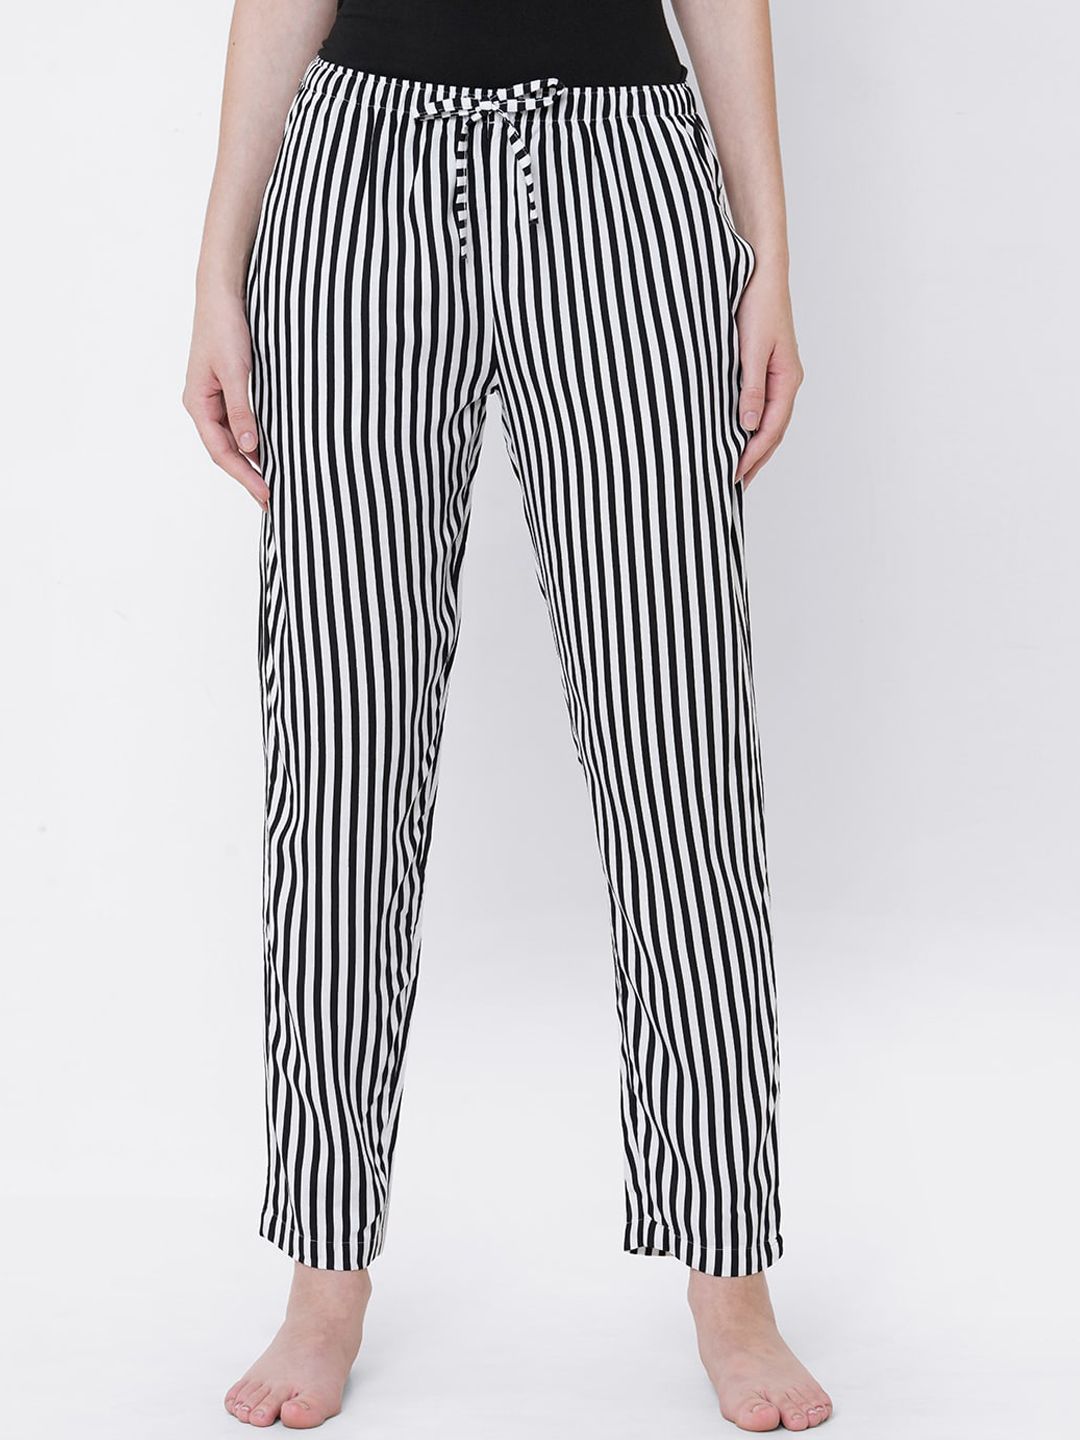 URBAN SCOTTISH Women Black & White Striped Lounge Pants Price in India